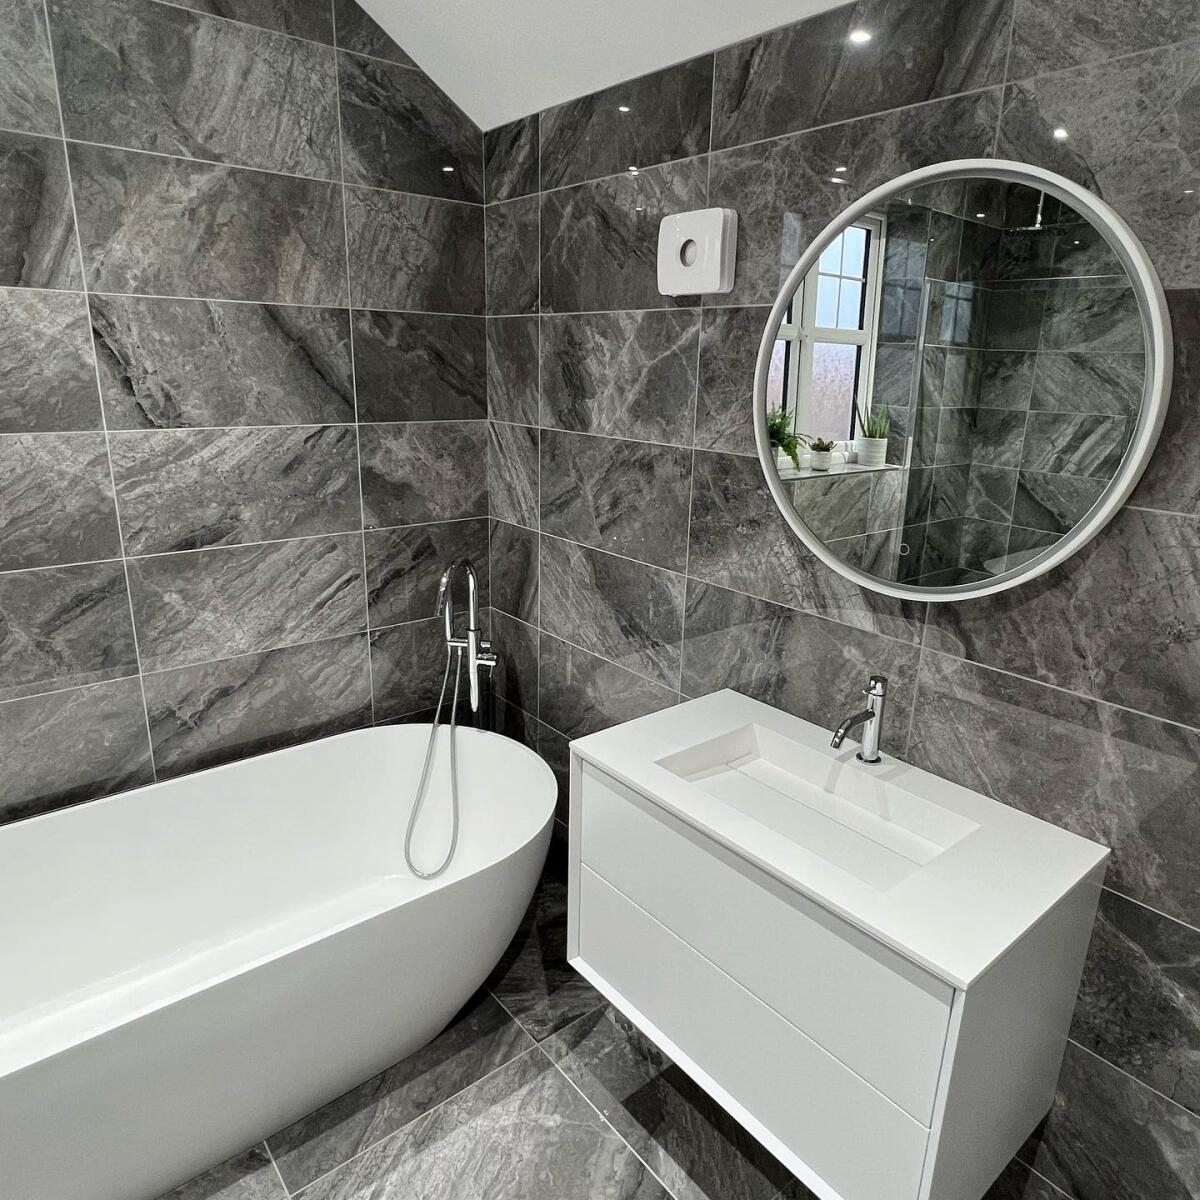 Aquaroc Bathrooms 5 star review on 6th April 2022